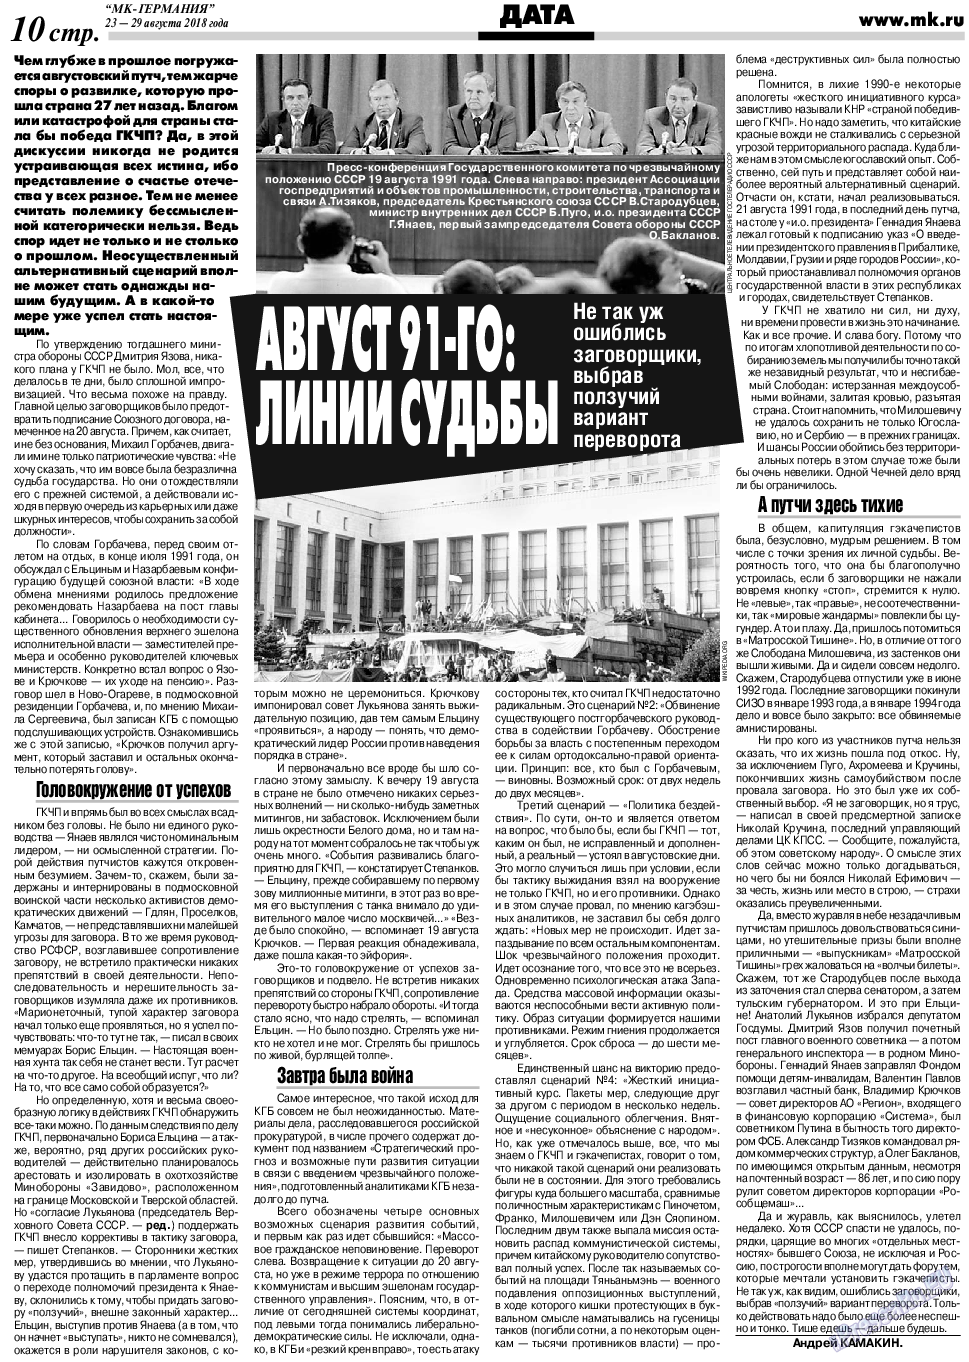 МК-Германия, газета. 2018 №35 стр.10